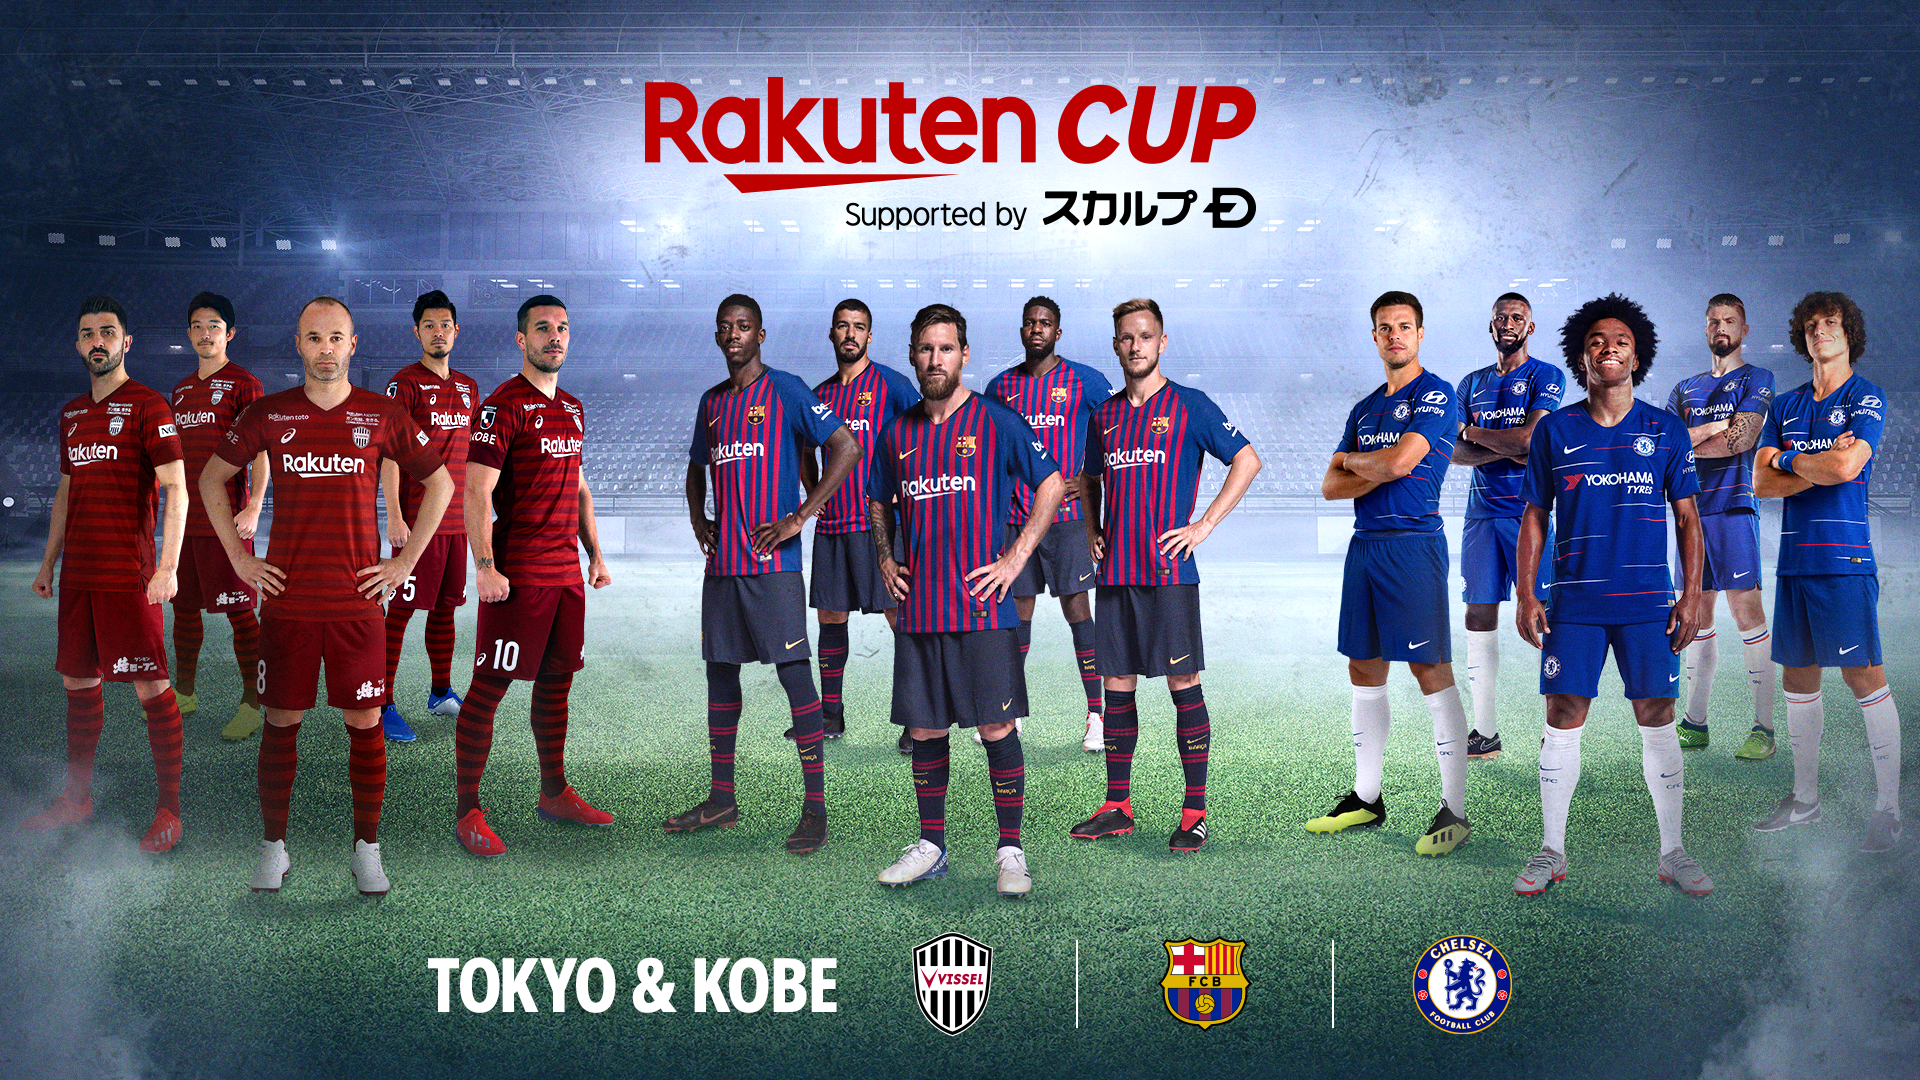 Rakuten Cup To Live Stream On Rakuten Tv And Rakuten Sports Rakuten Group Inc